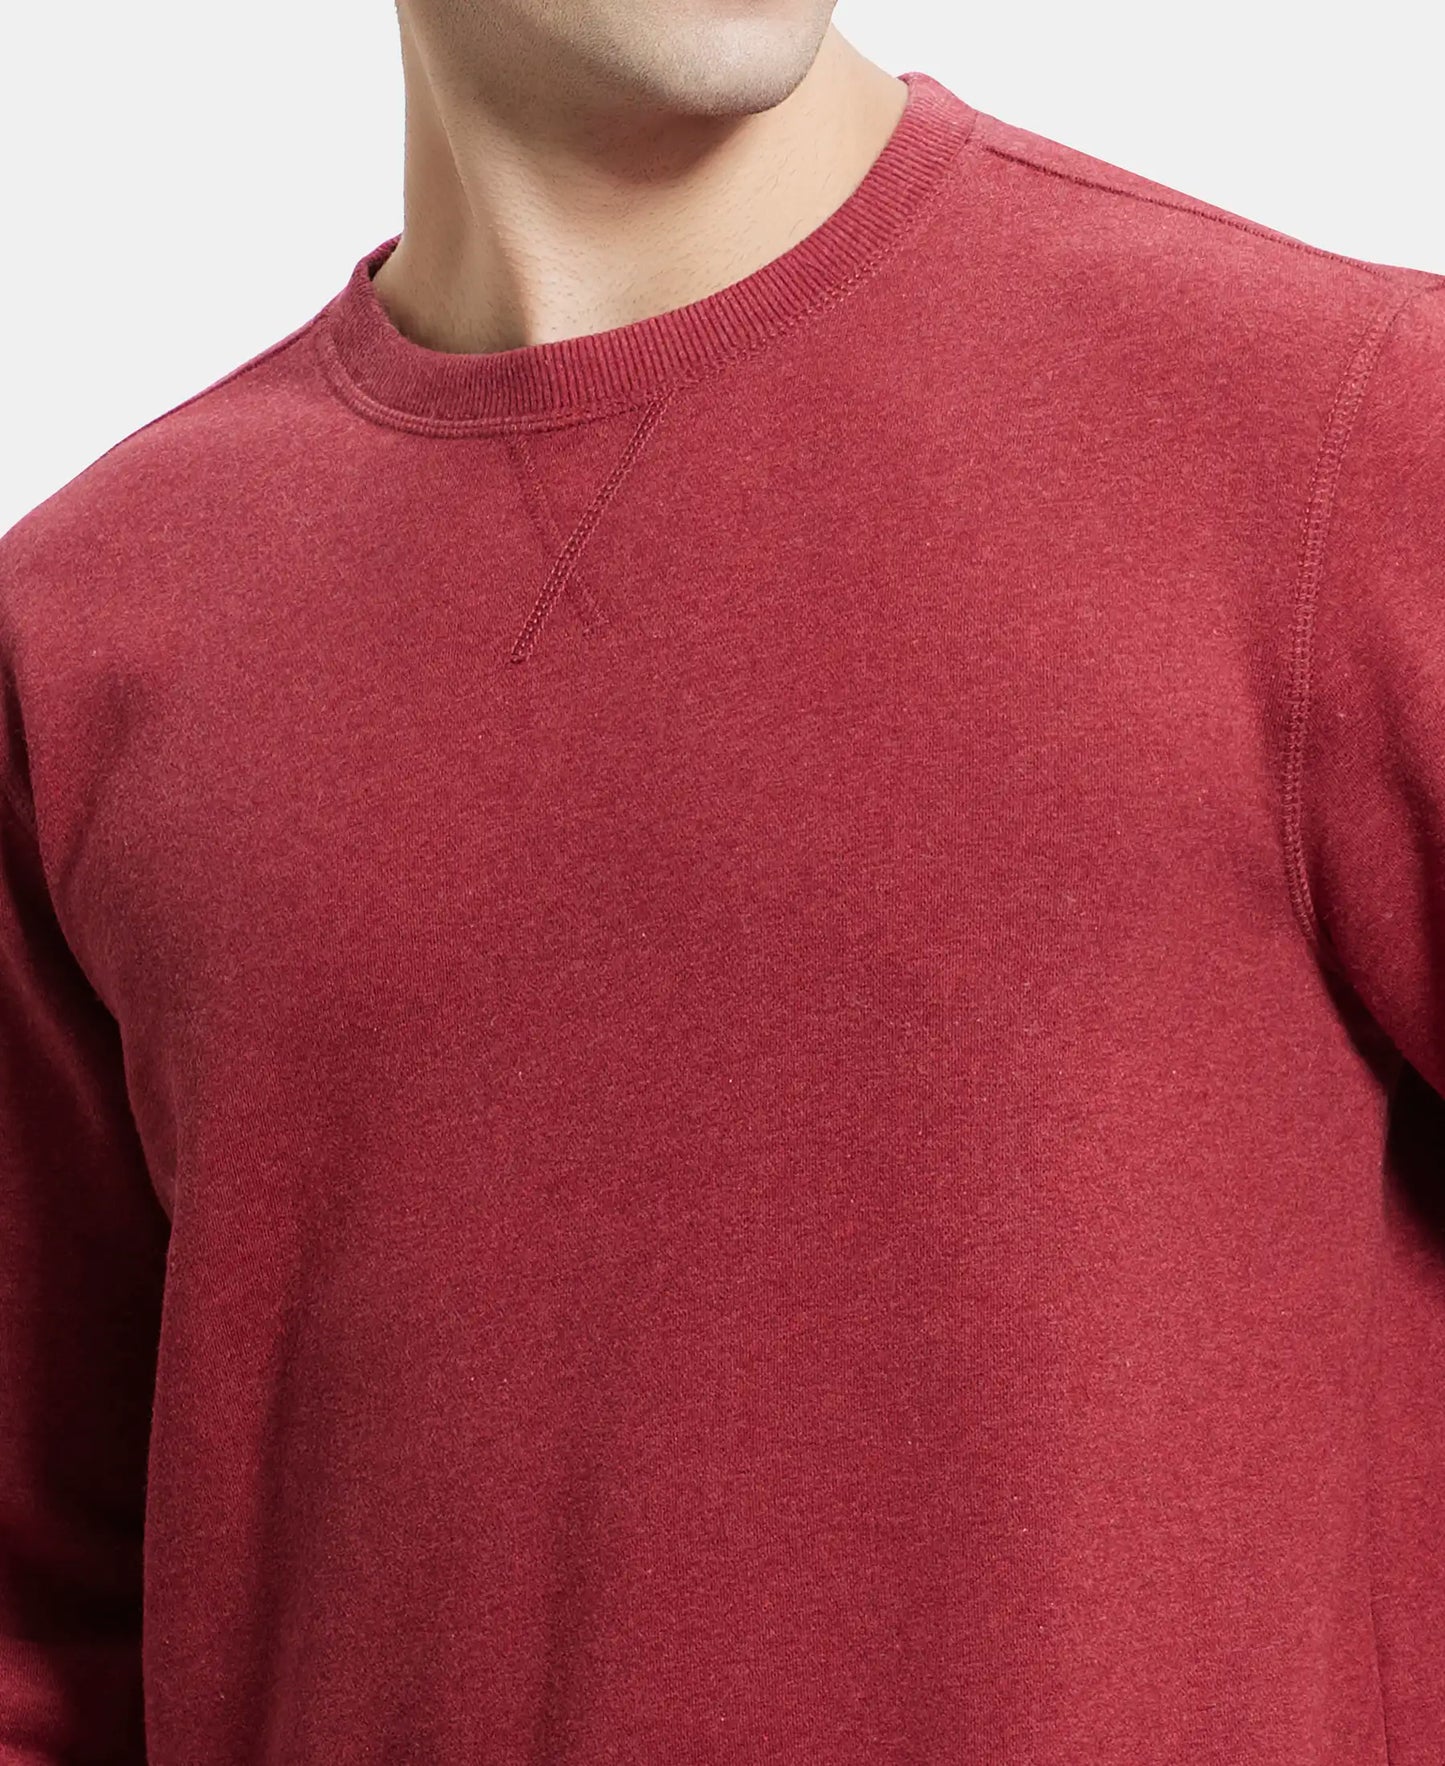 Super Combed Cotton Rich Fleece Sweatshirt with StayWarm Technology - Red Melange-6